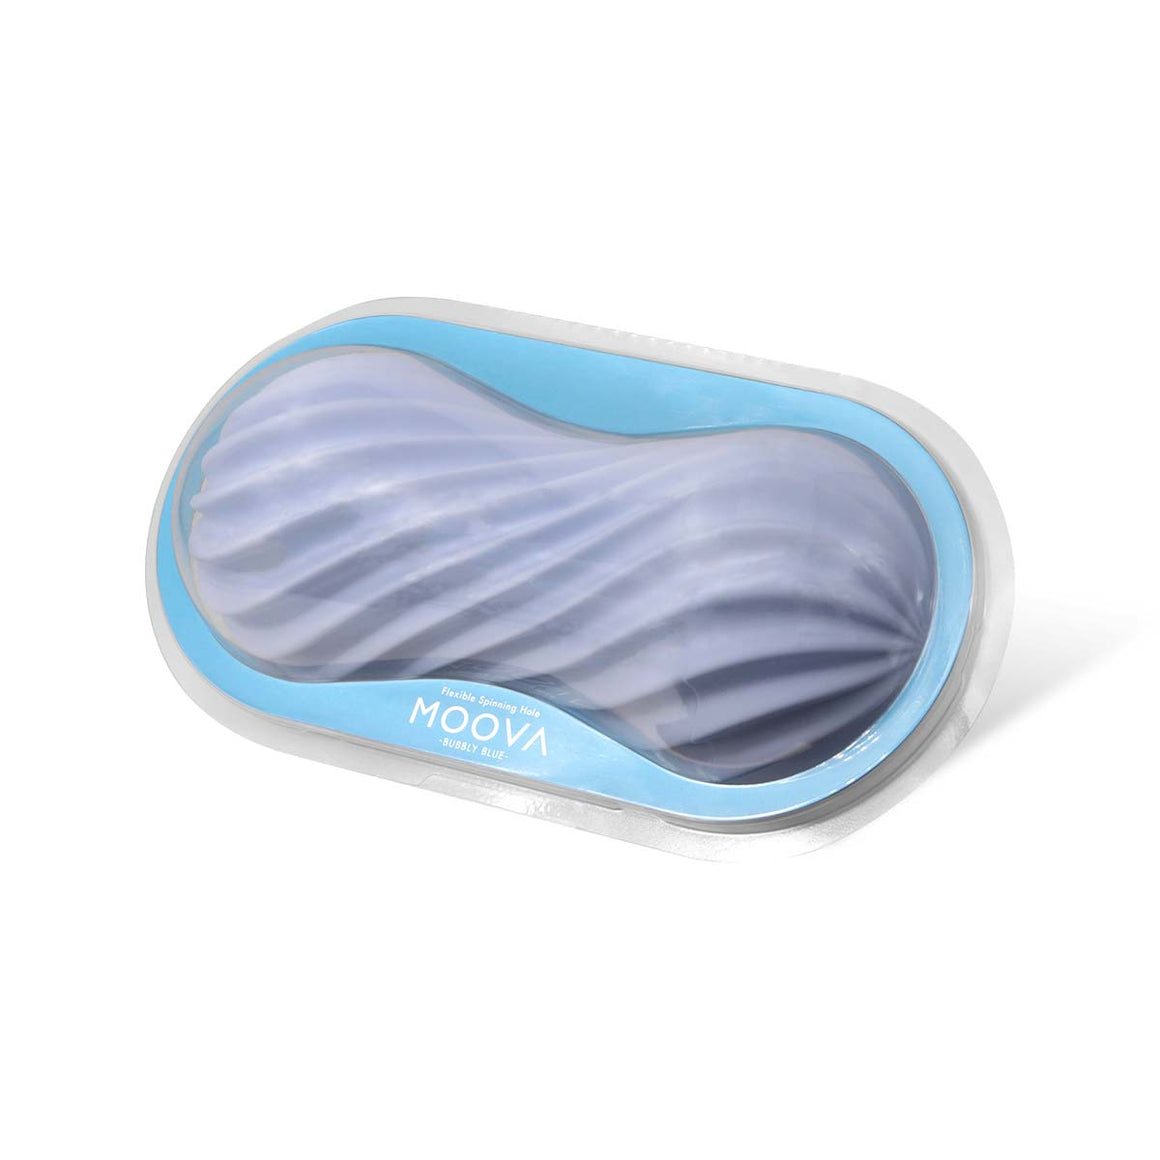 Tenga Moova 軟殼螺旋自慰飛機杯 - 氣泡藍 (可重複使用)